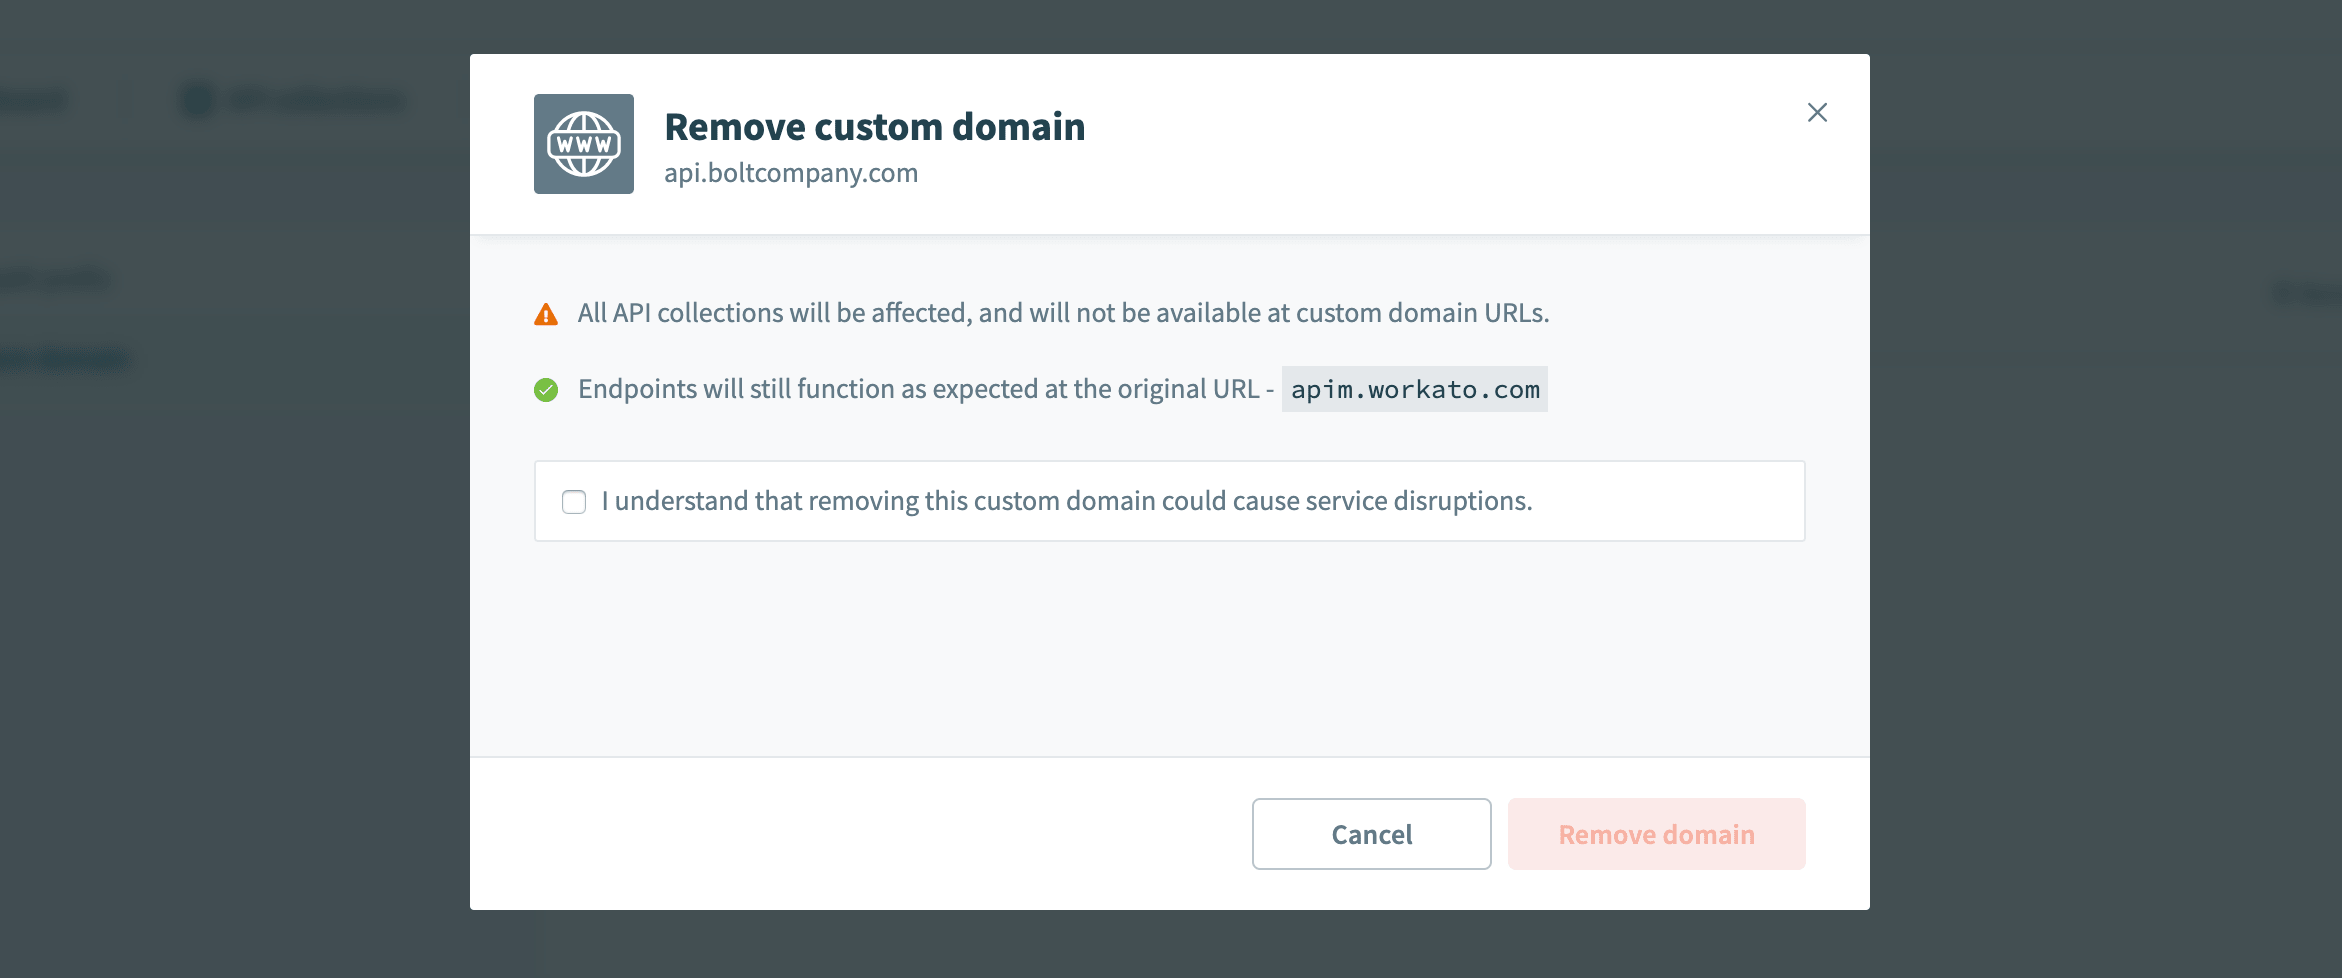 Remove custom domain